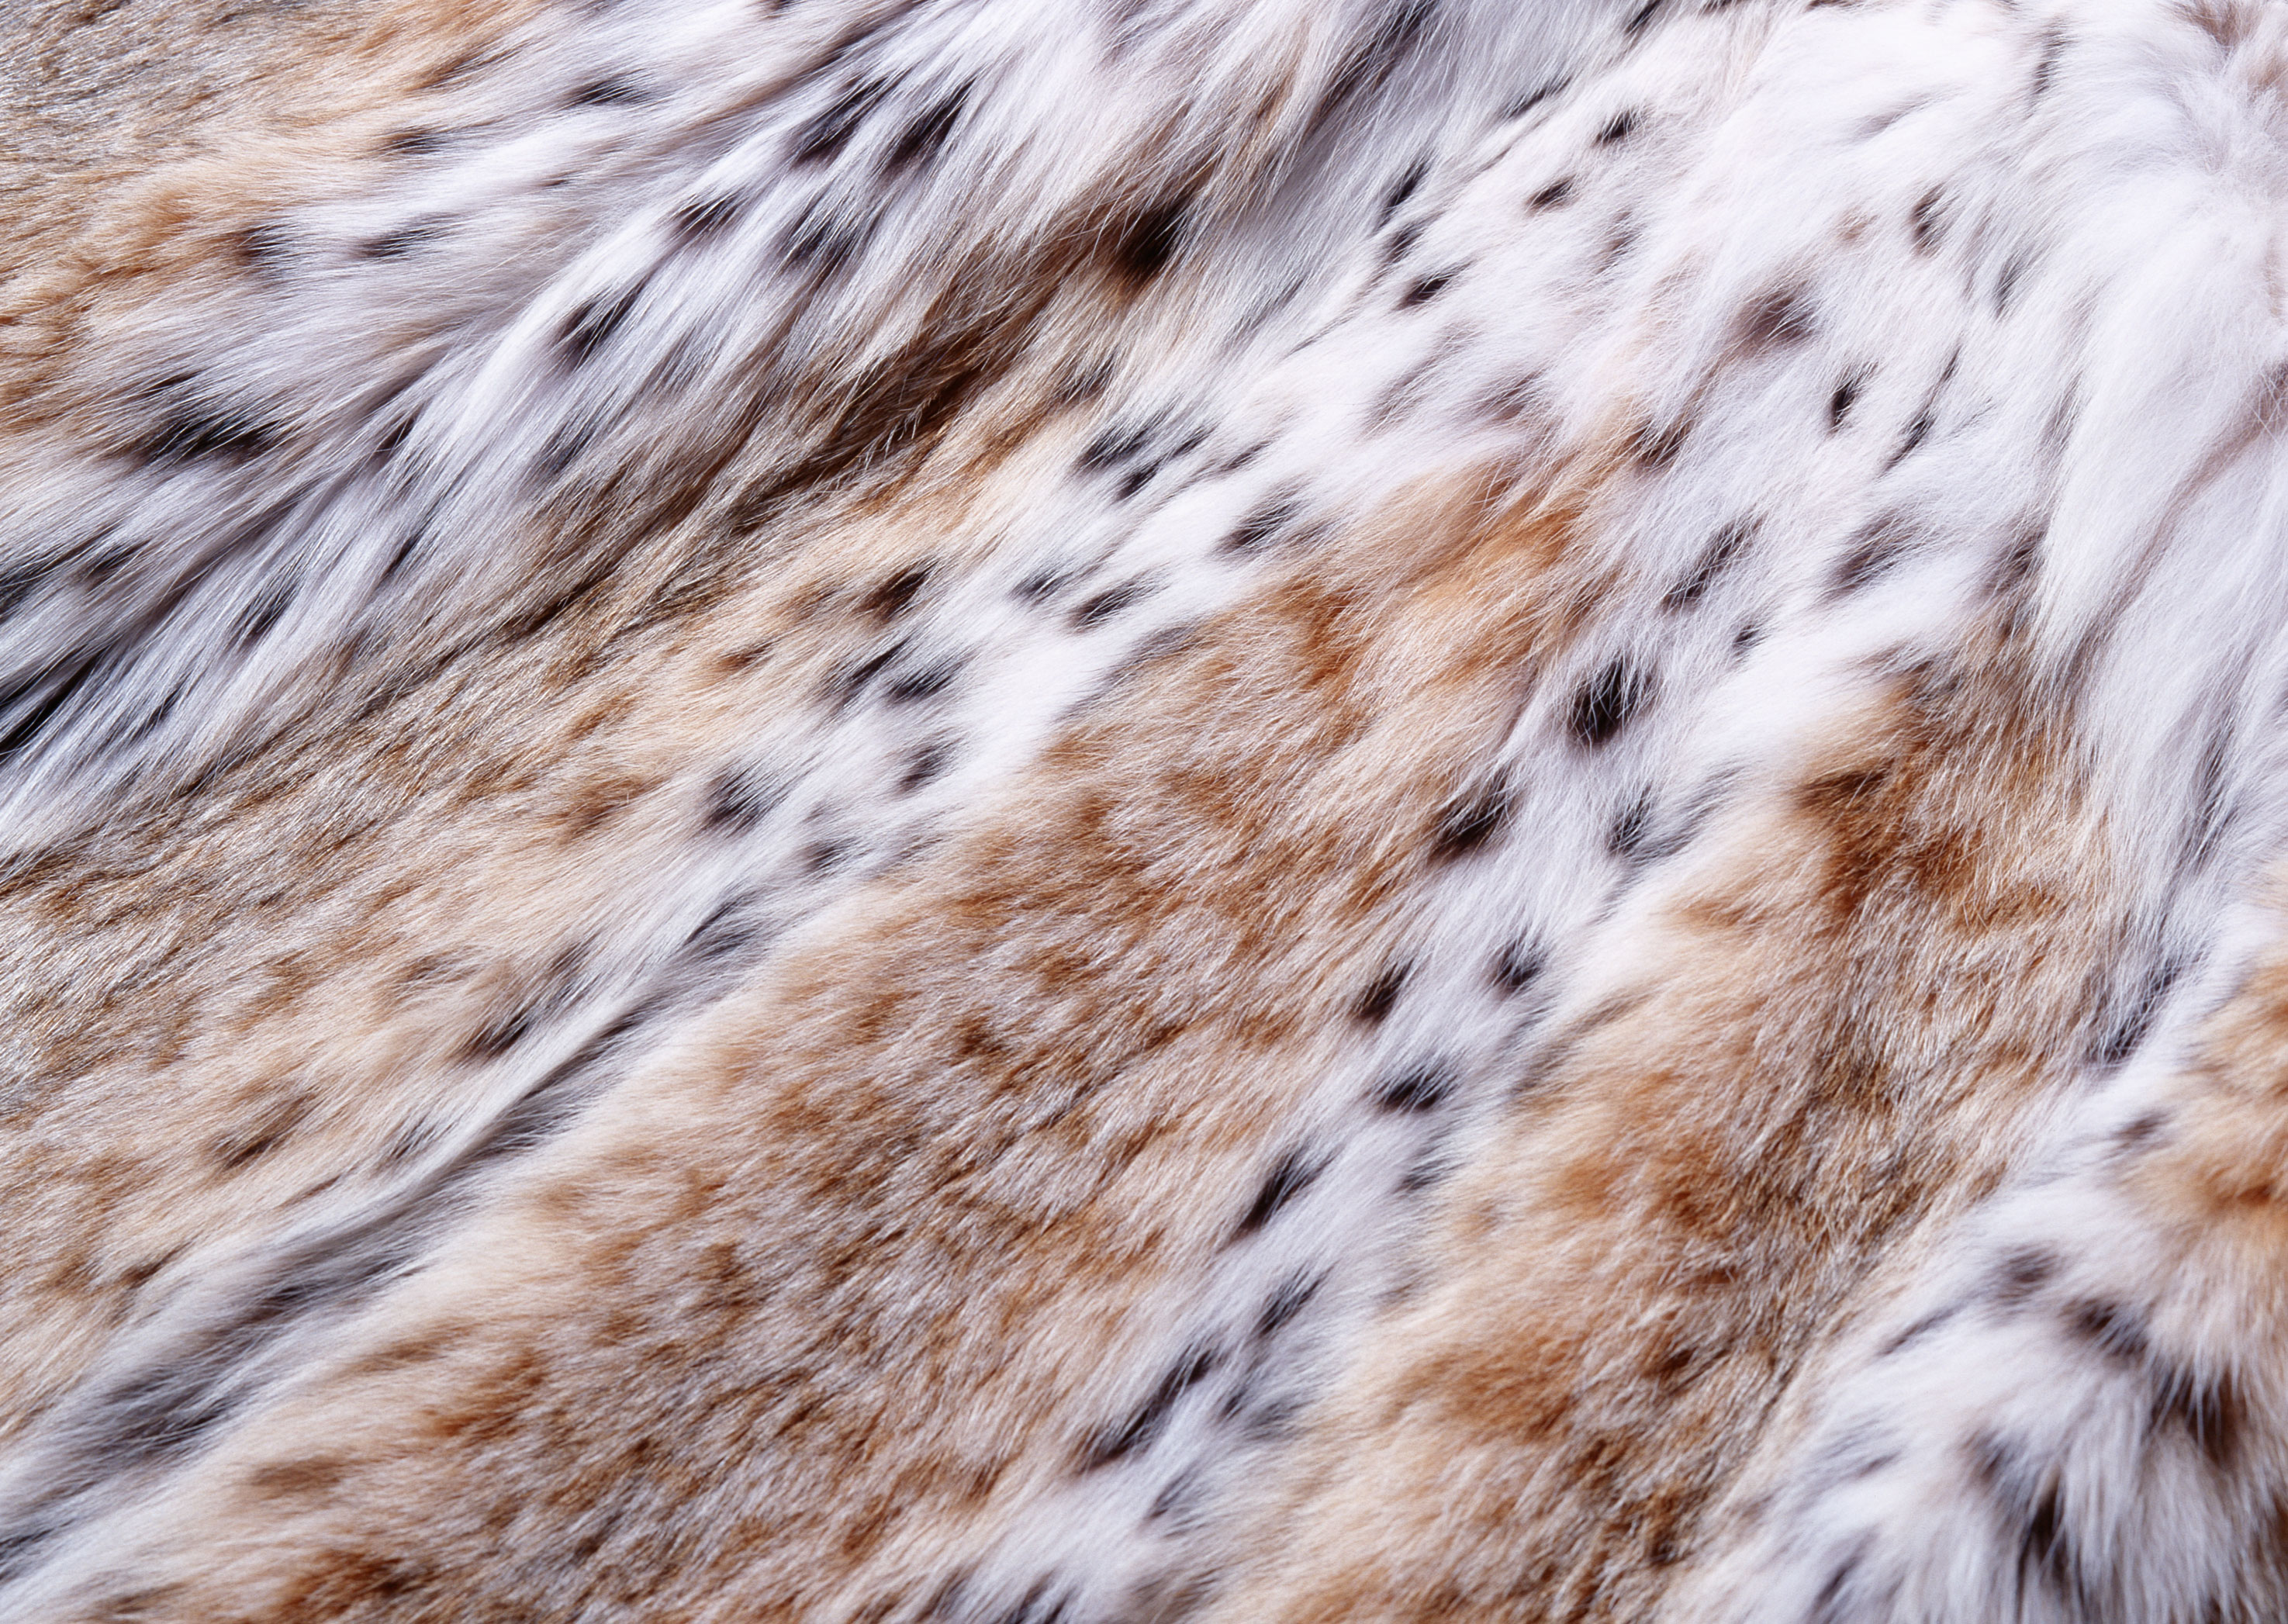 Fur texture background image